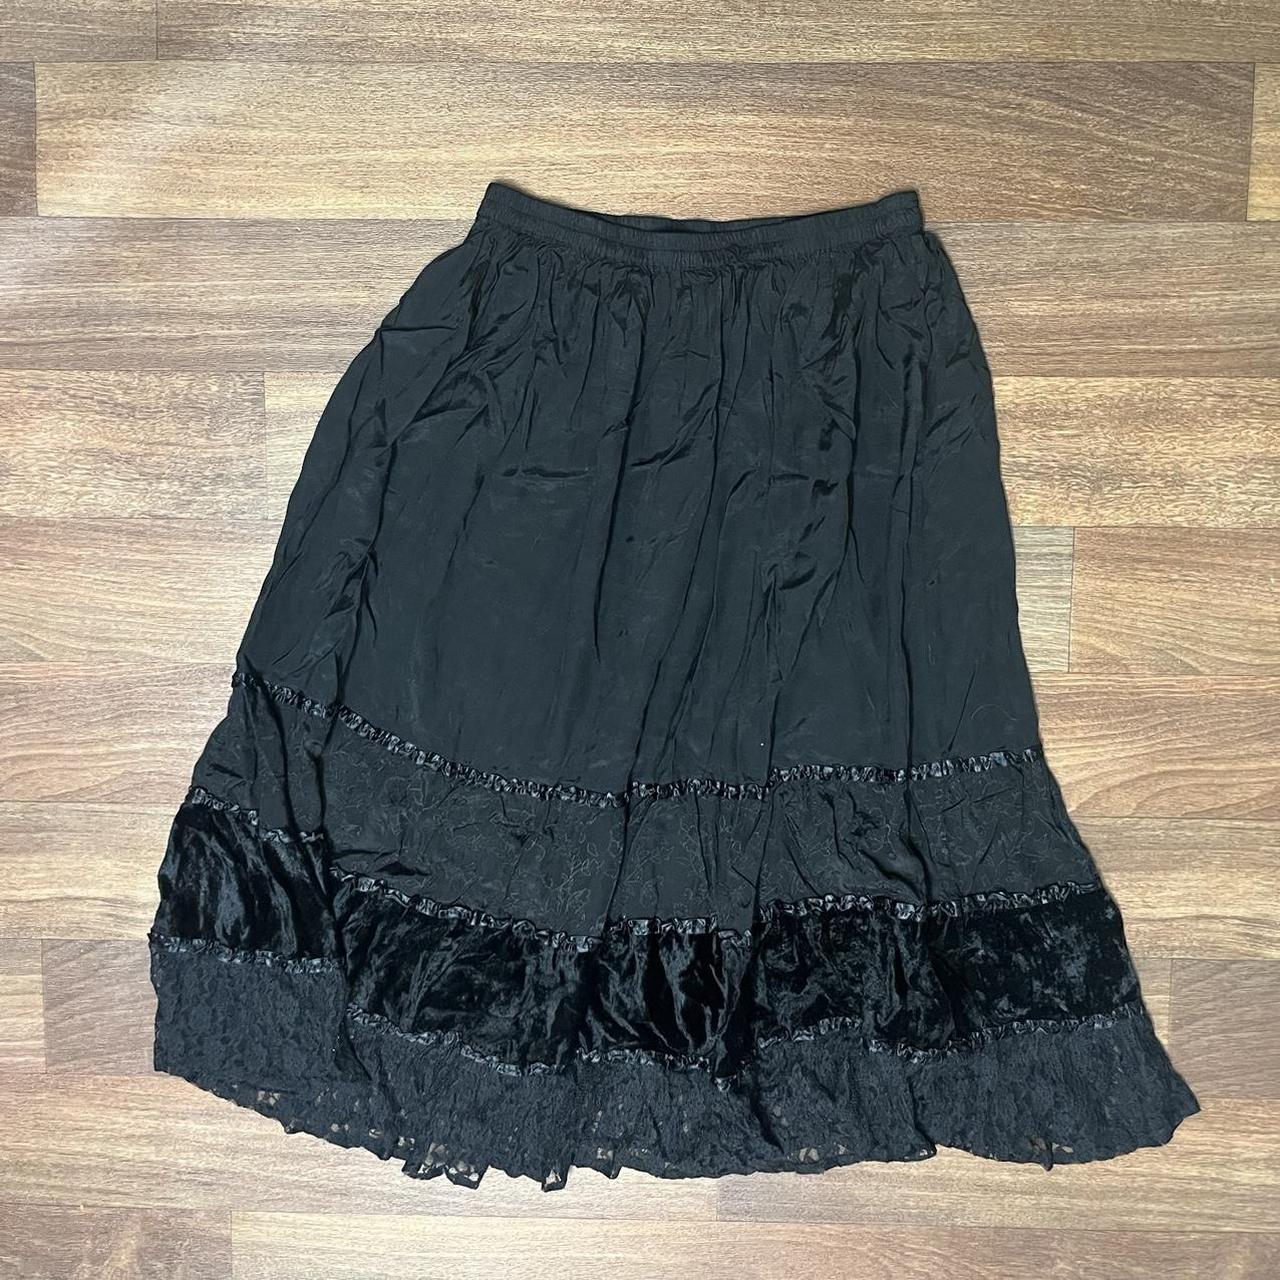 gorgeous whimsigoth maxi skirt with lace, velvet,... - Depop